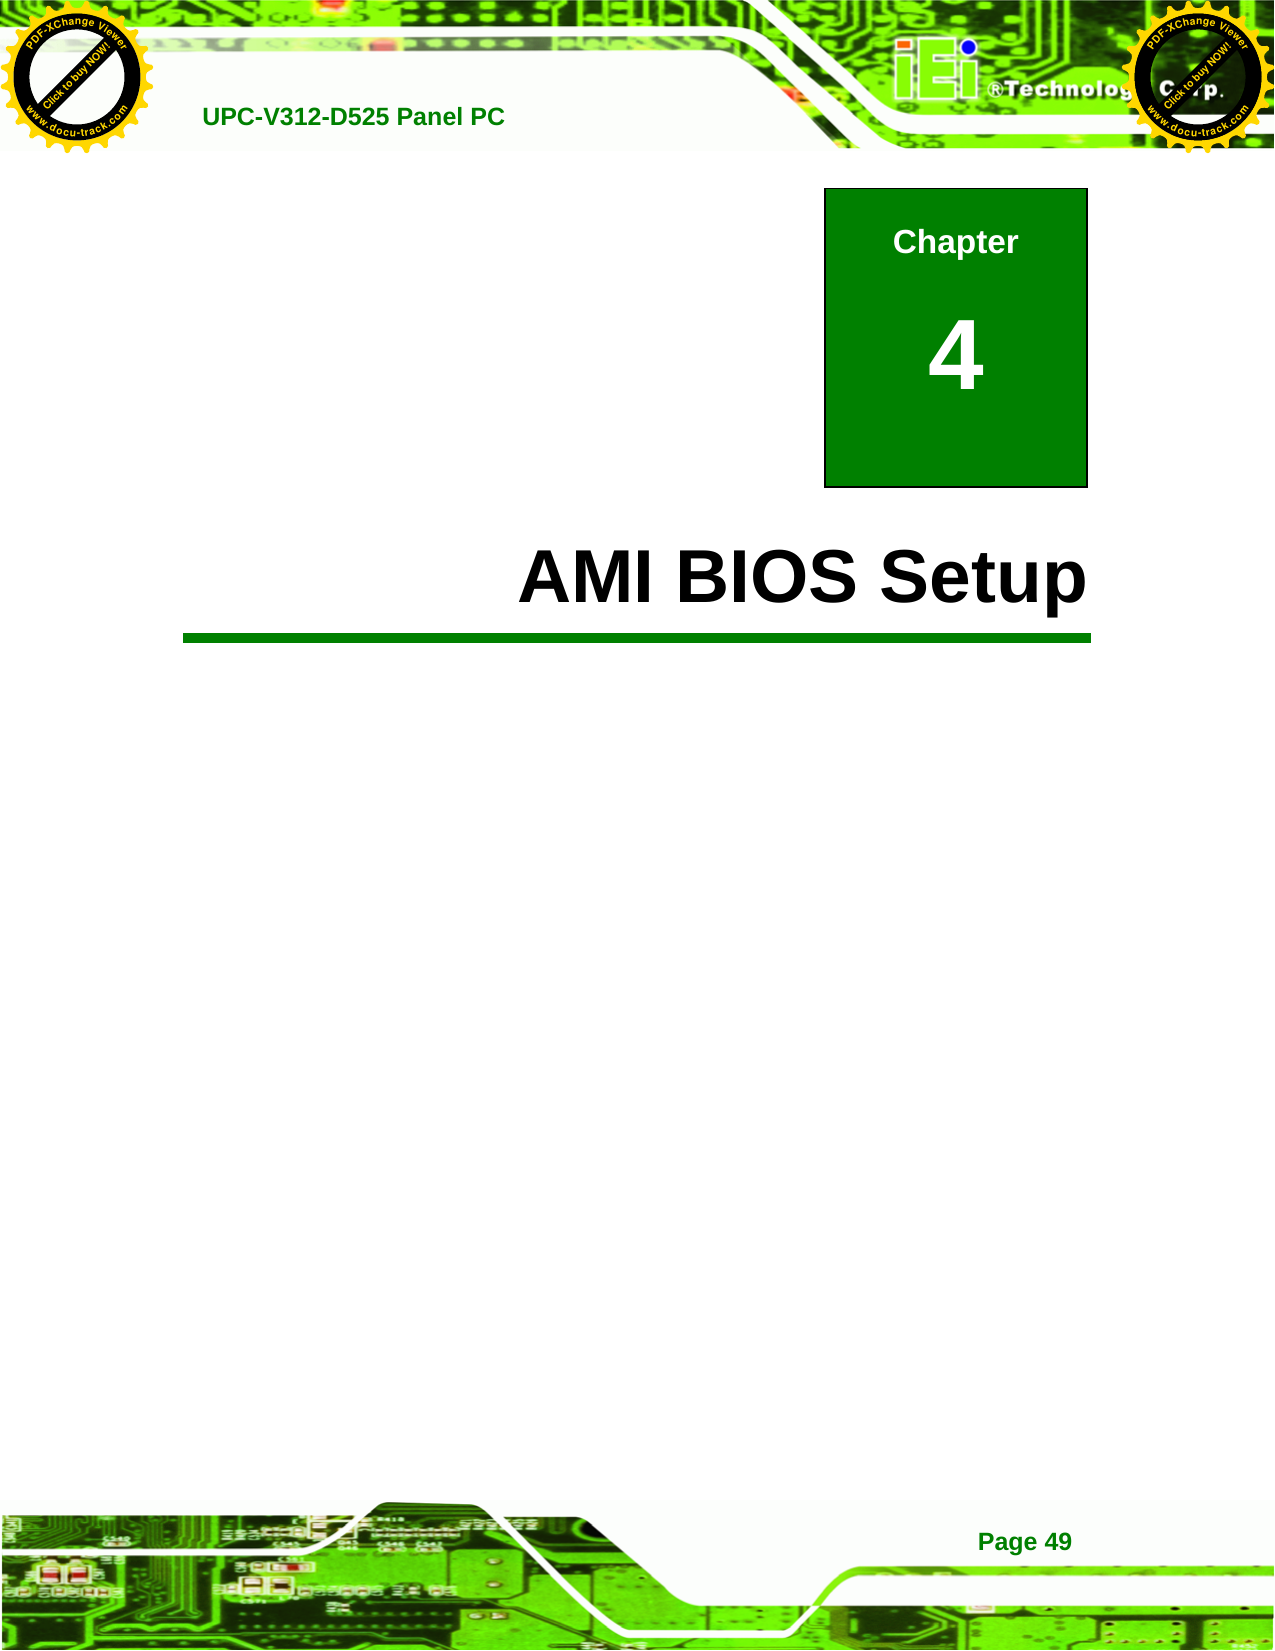   UPC-V312-D525 Panel PC Page 49     4 AMI BIOS Setup Chapter 4 Click to buy NOW!PDF-XChange Viewerwww.docu-track.comClick to buy NOW!PDF-XChange Viewerwww.docu-track.com